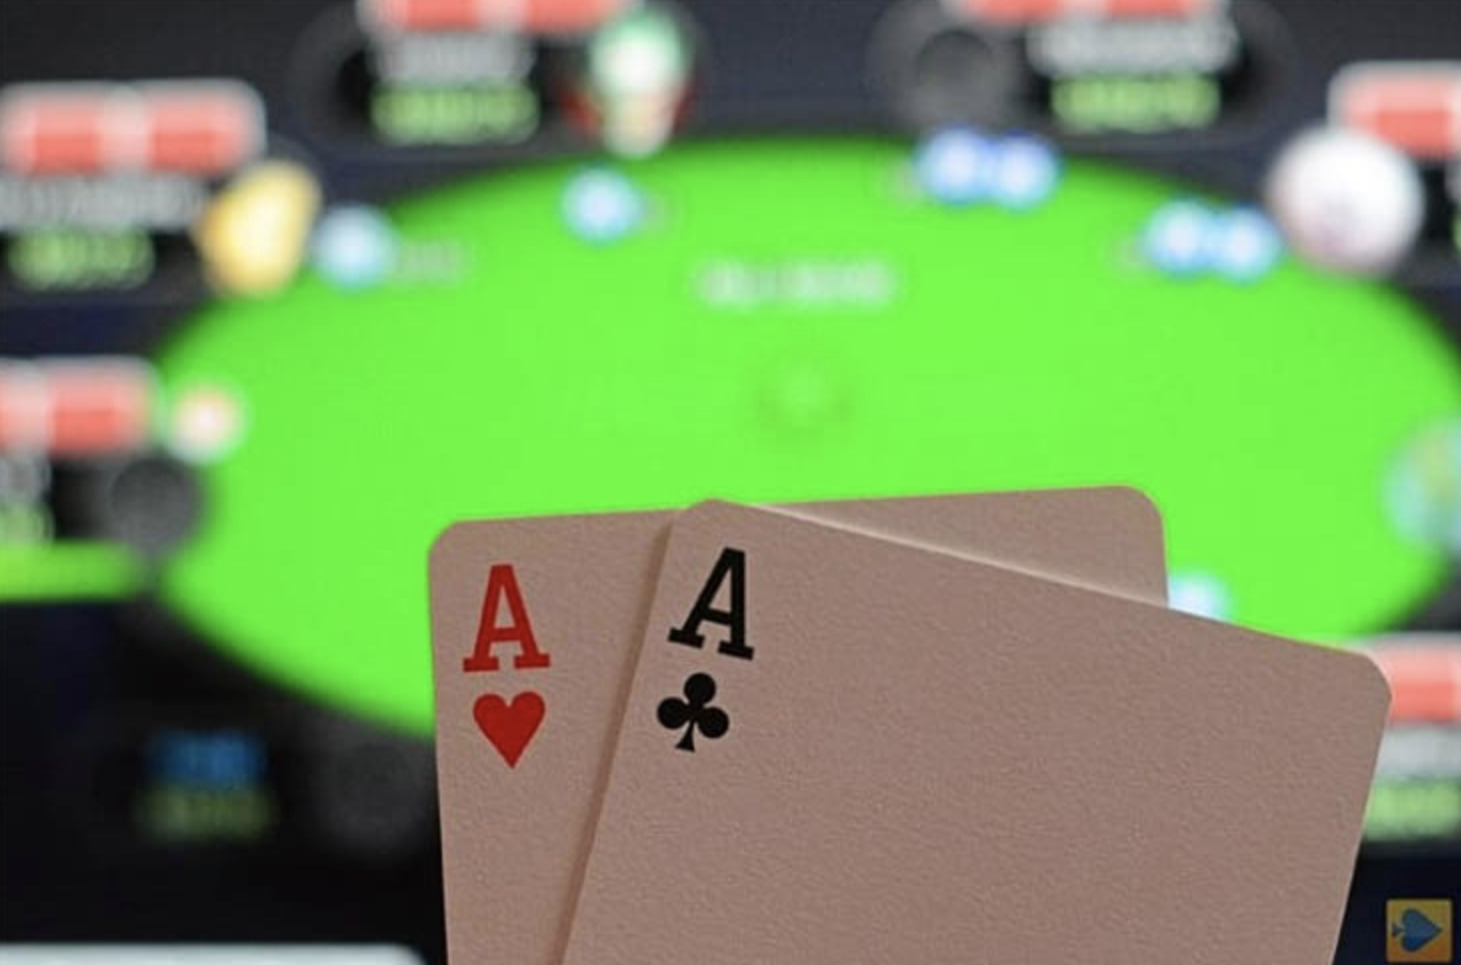 Free Online Poker Games - Play Poker Online at adda52